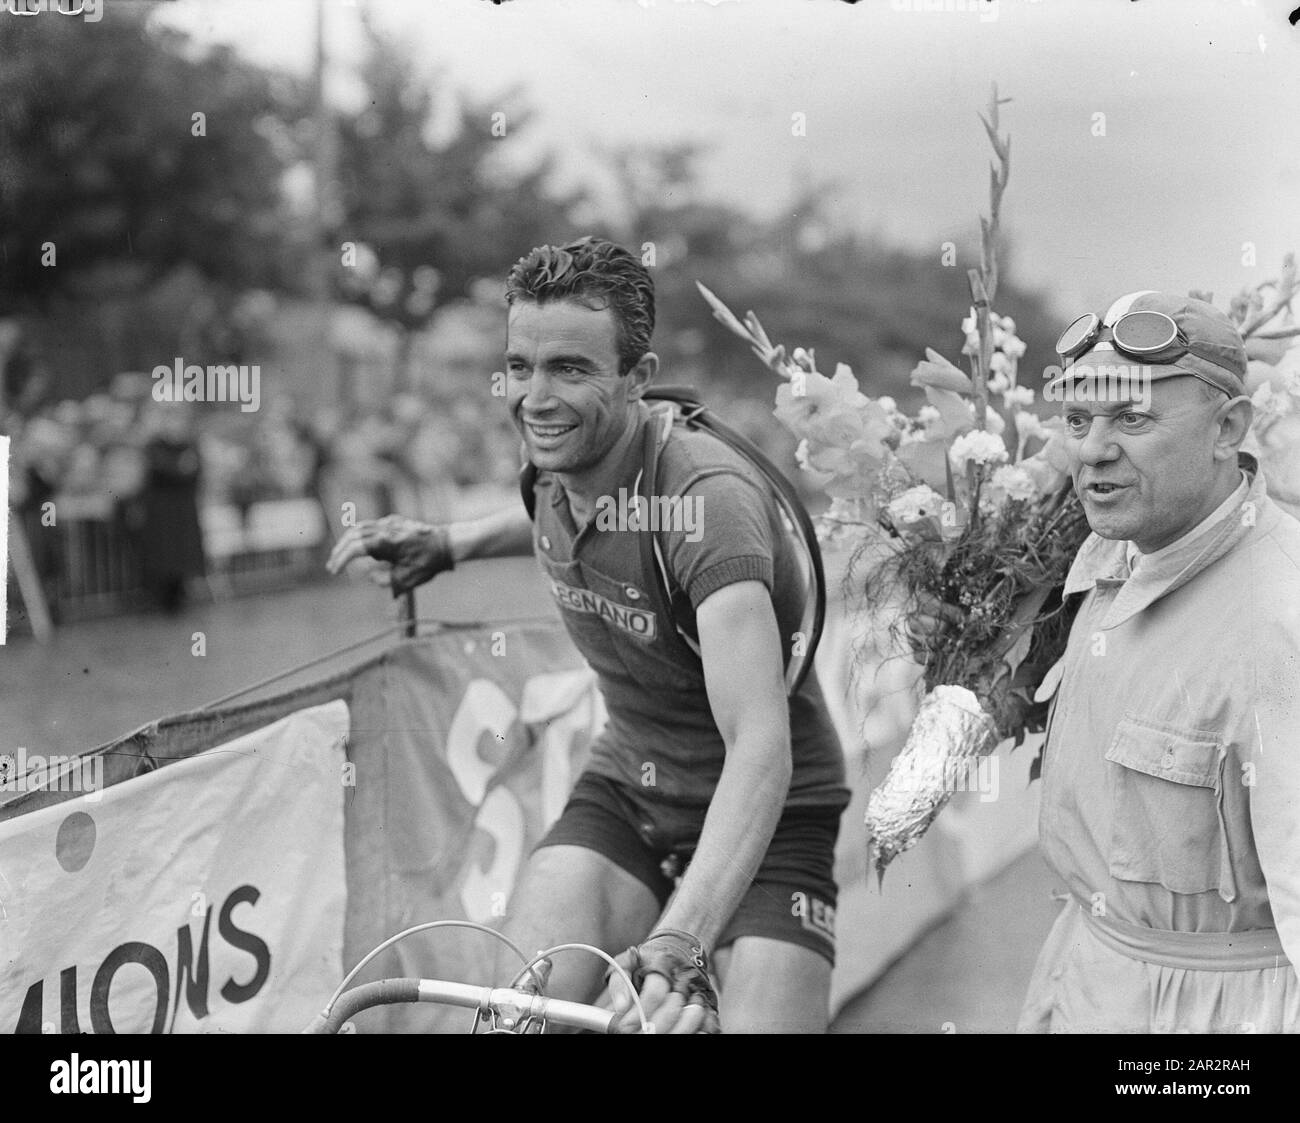 Tour de France, Gewinner der 2. Etappe (Reims Liège), Adolfo Leoni (Italien) Datum: 14. Juli 1950 Ort: Belgien, Liège Schlüsselwörter: Sport, Radsport persönlicher Name: Leoni Adolfo Stockfoto